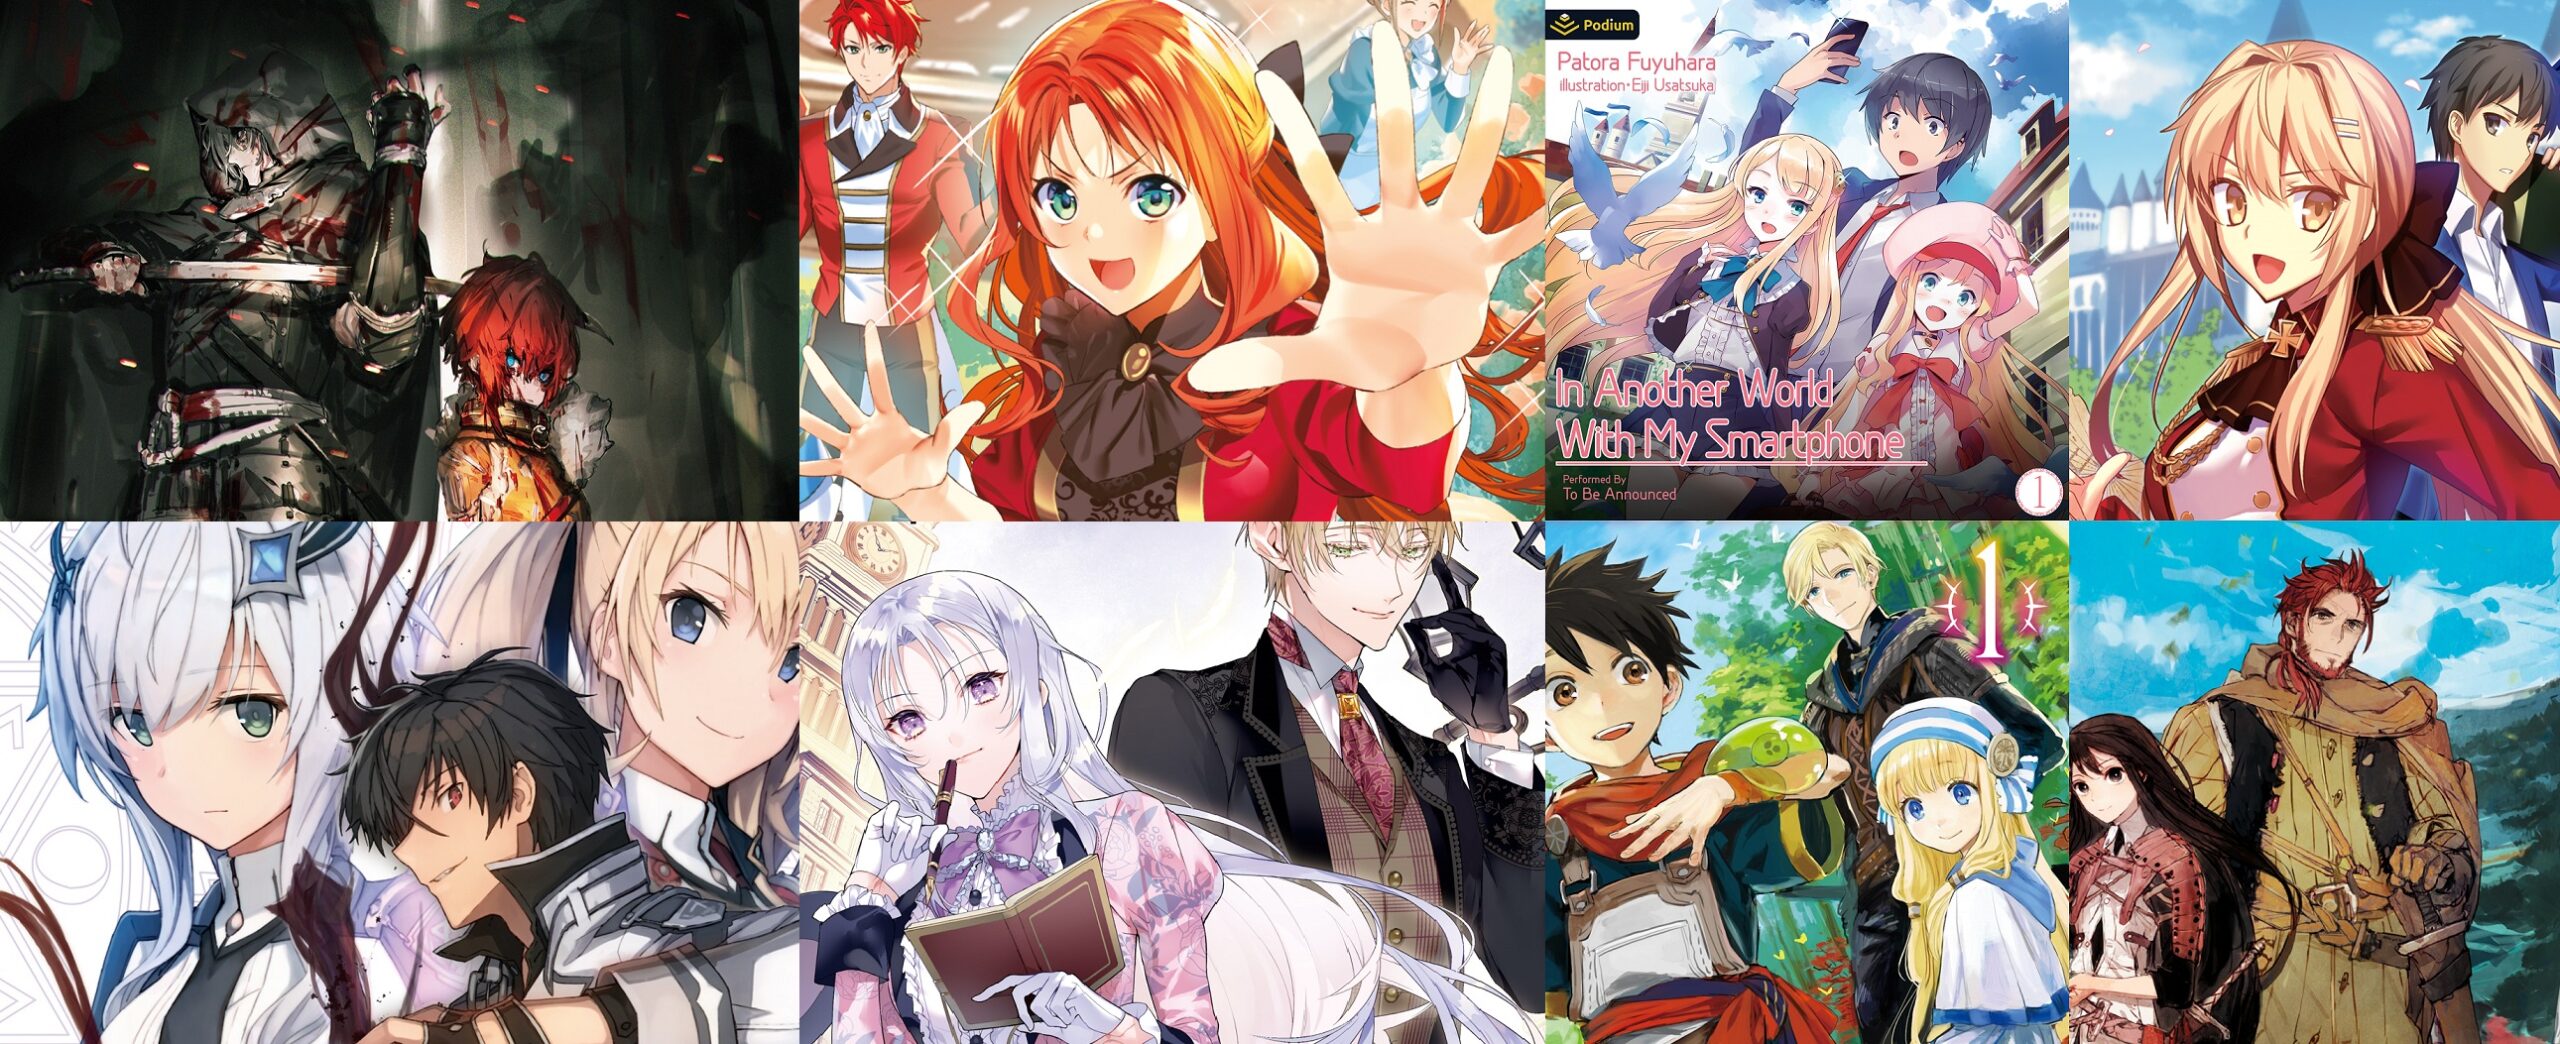 J-Novel Club Announces Fourteen New Light Novel Series